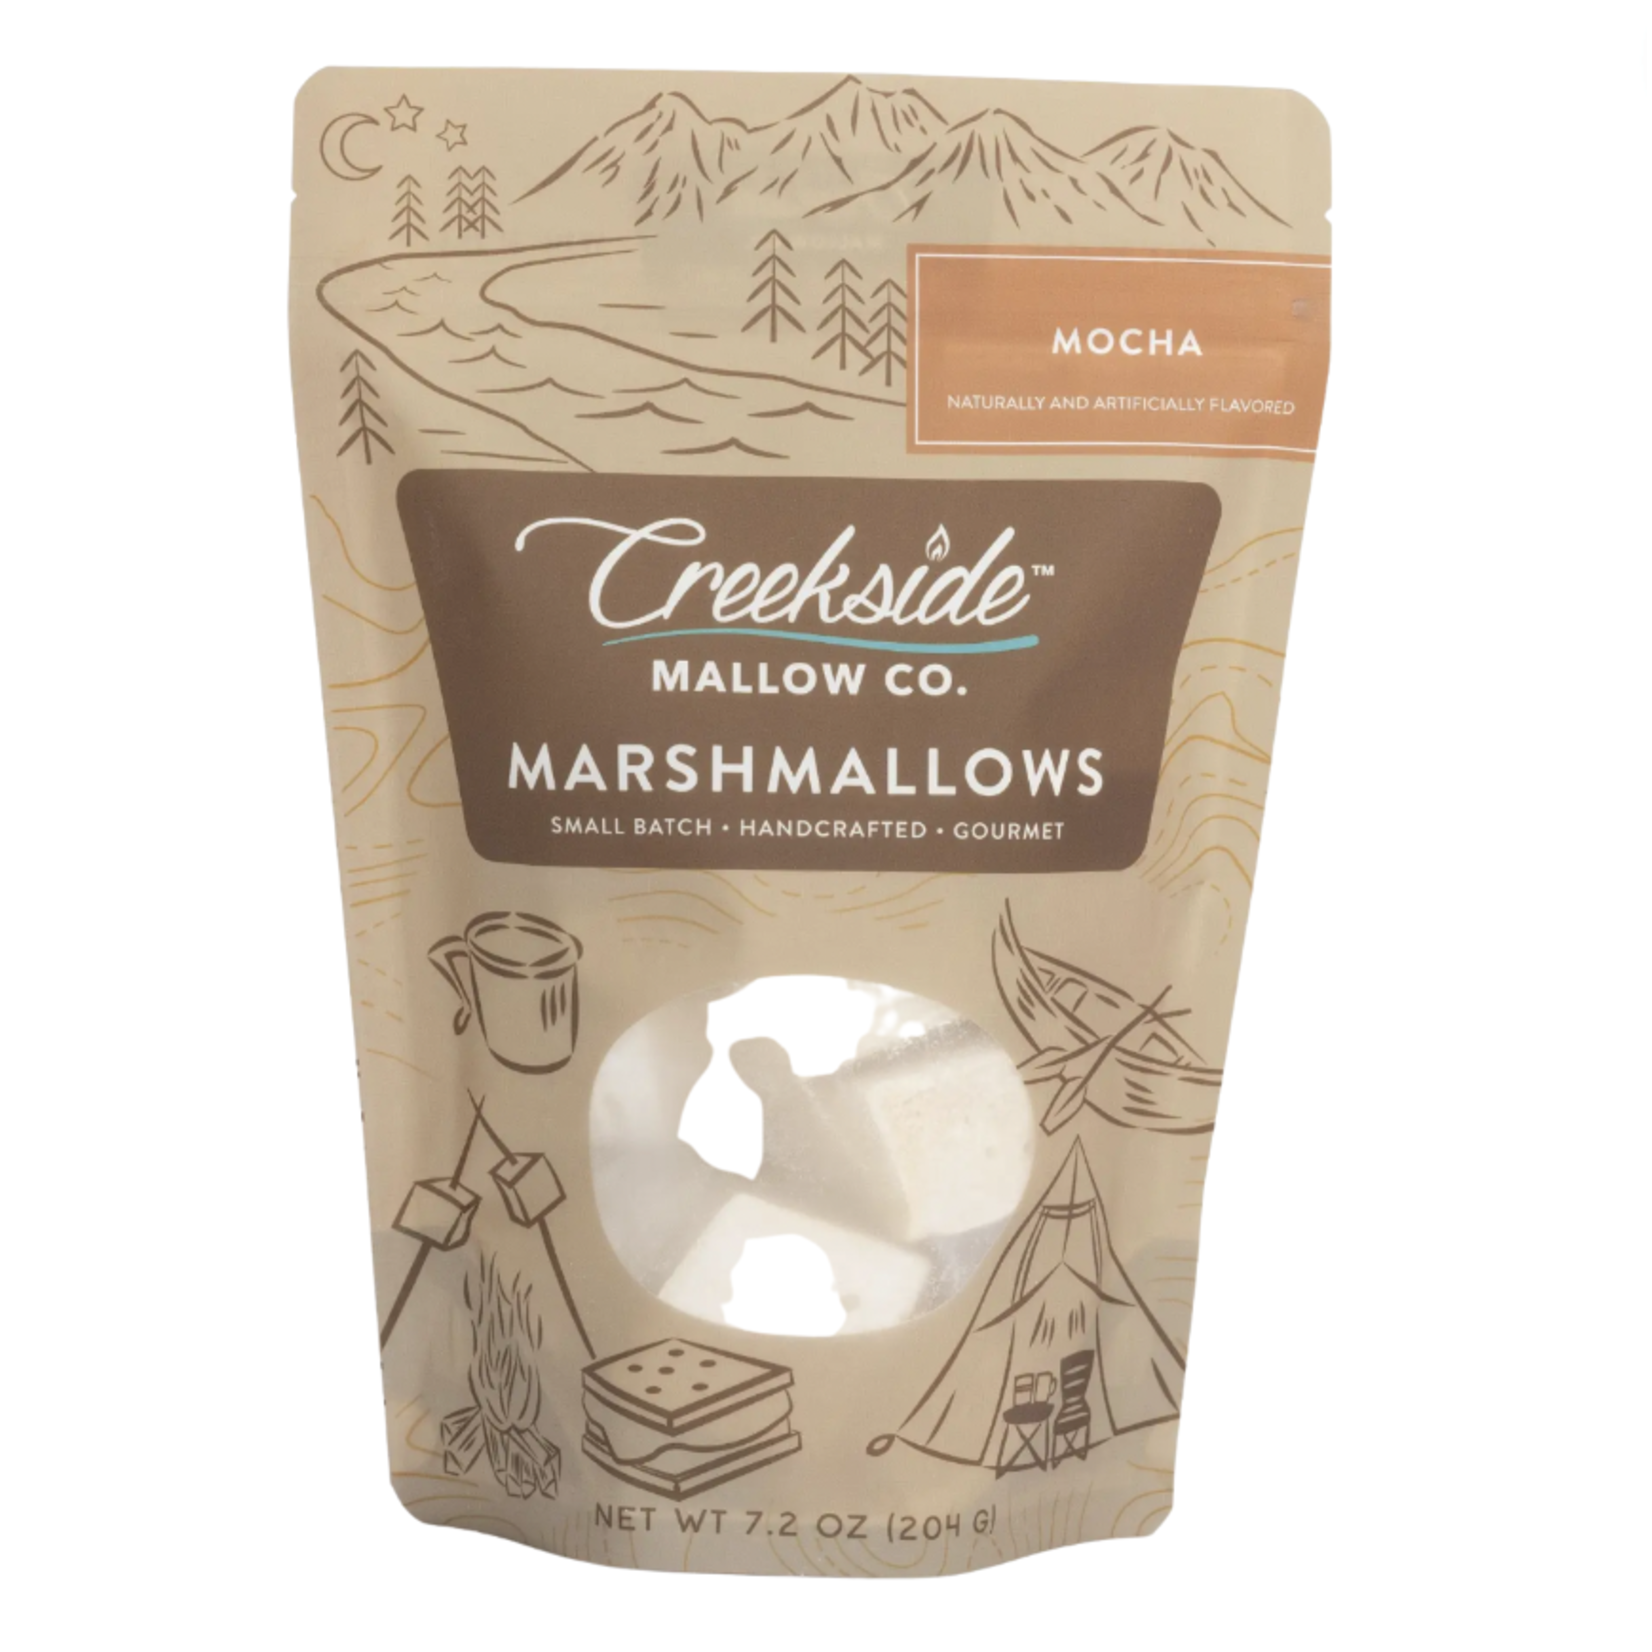 Creekside Mallow Co. / Fireside Mallow Co. Mocha Marshmallow Bag